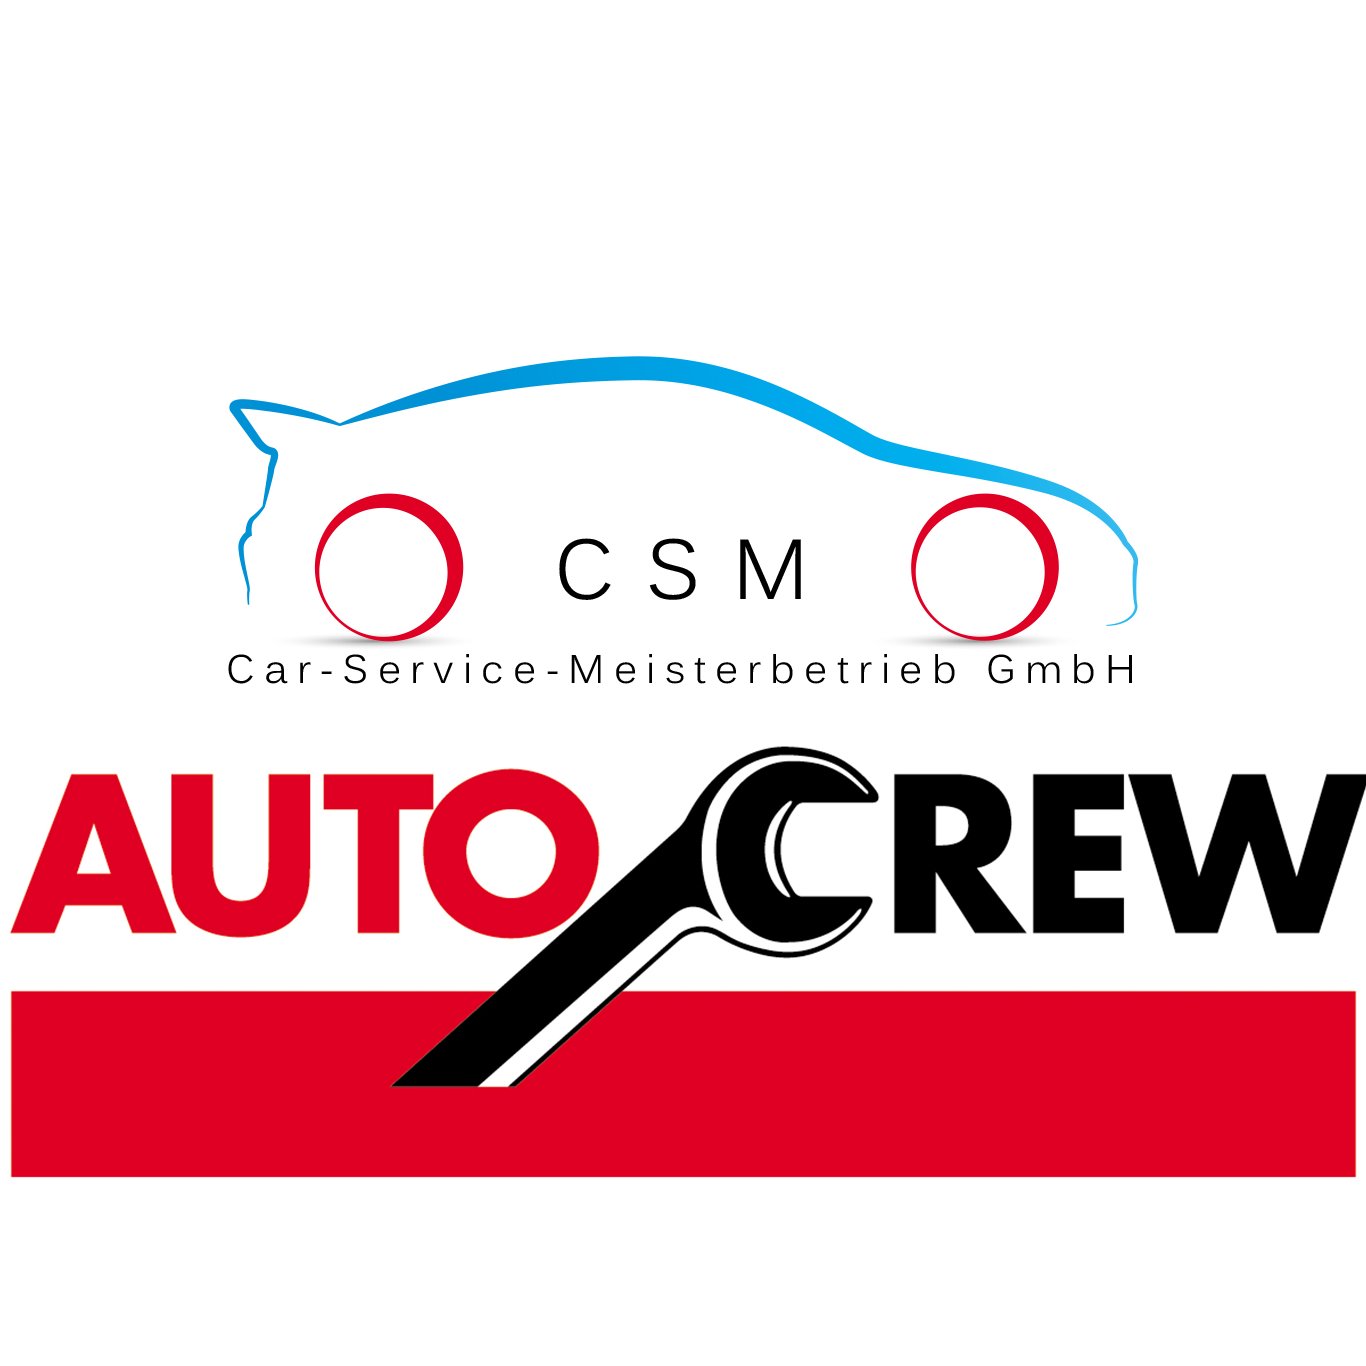 AutoCrew - CSM Car-Service-Meisterbetrieb GmbH Logo